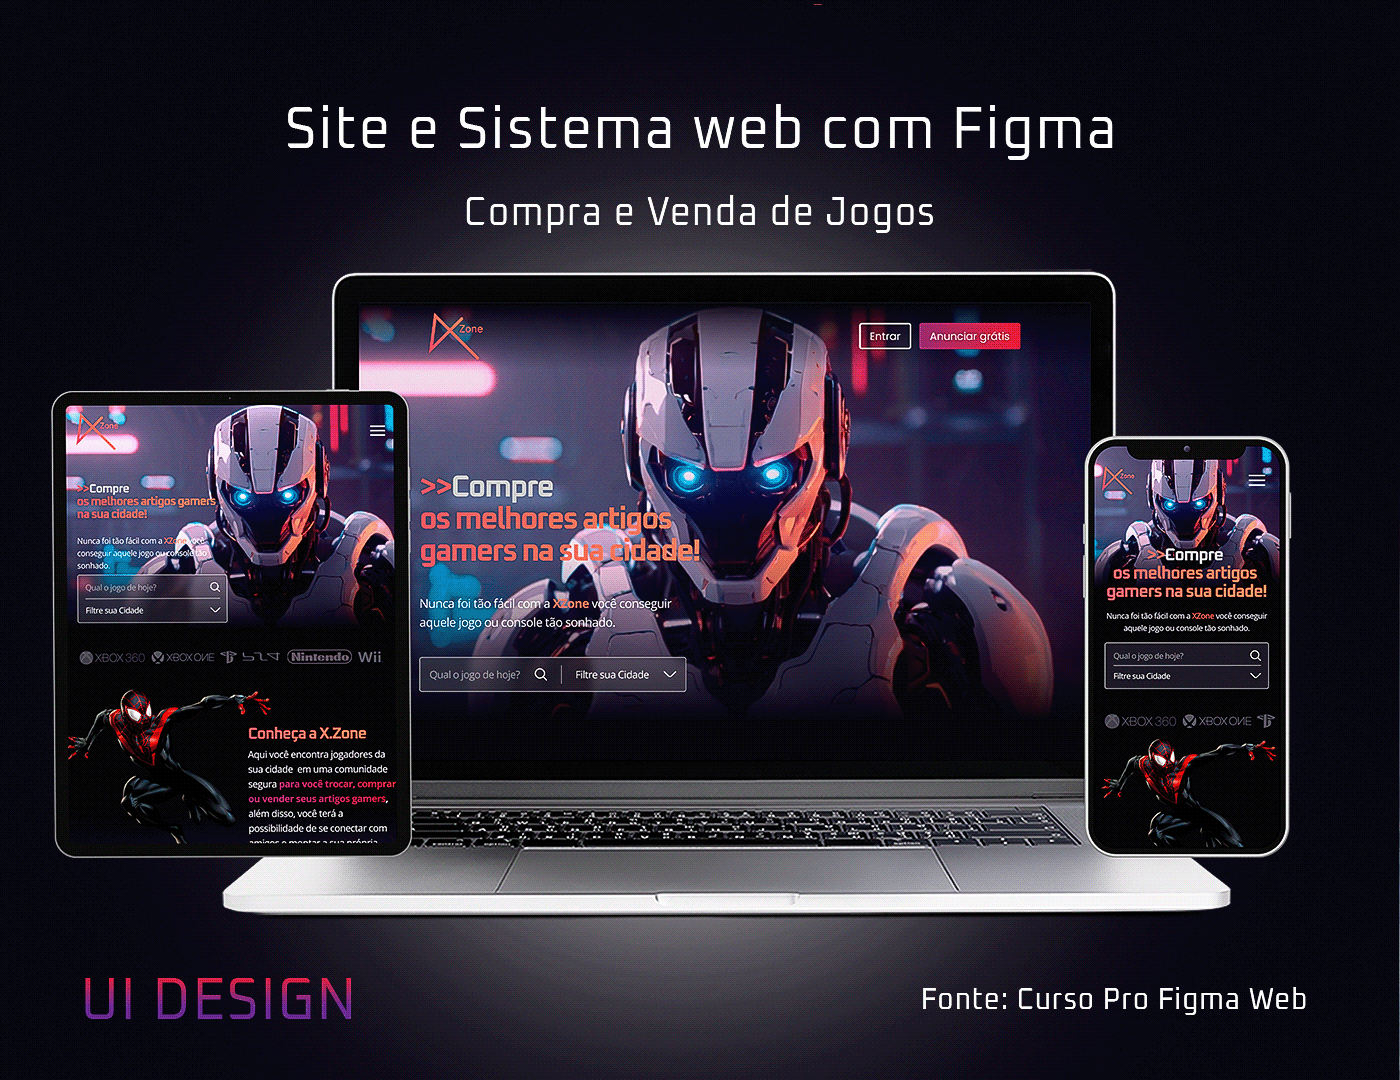 Figma UI/UX ui design Web landing page Website Design ux Mobile app user interface Experience